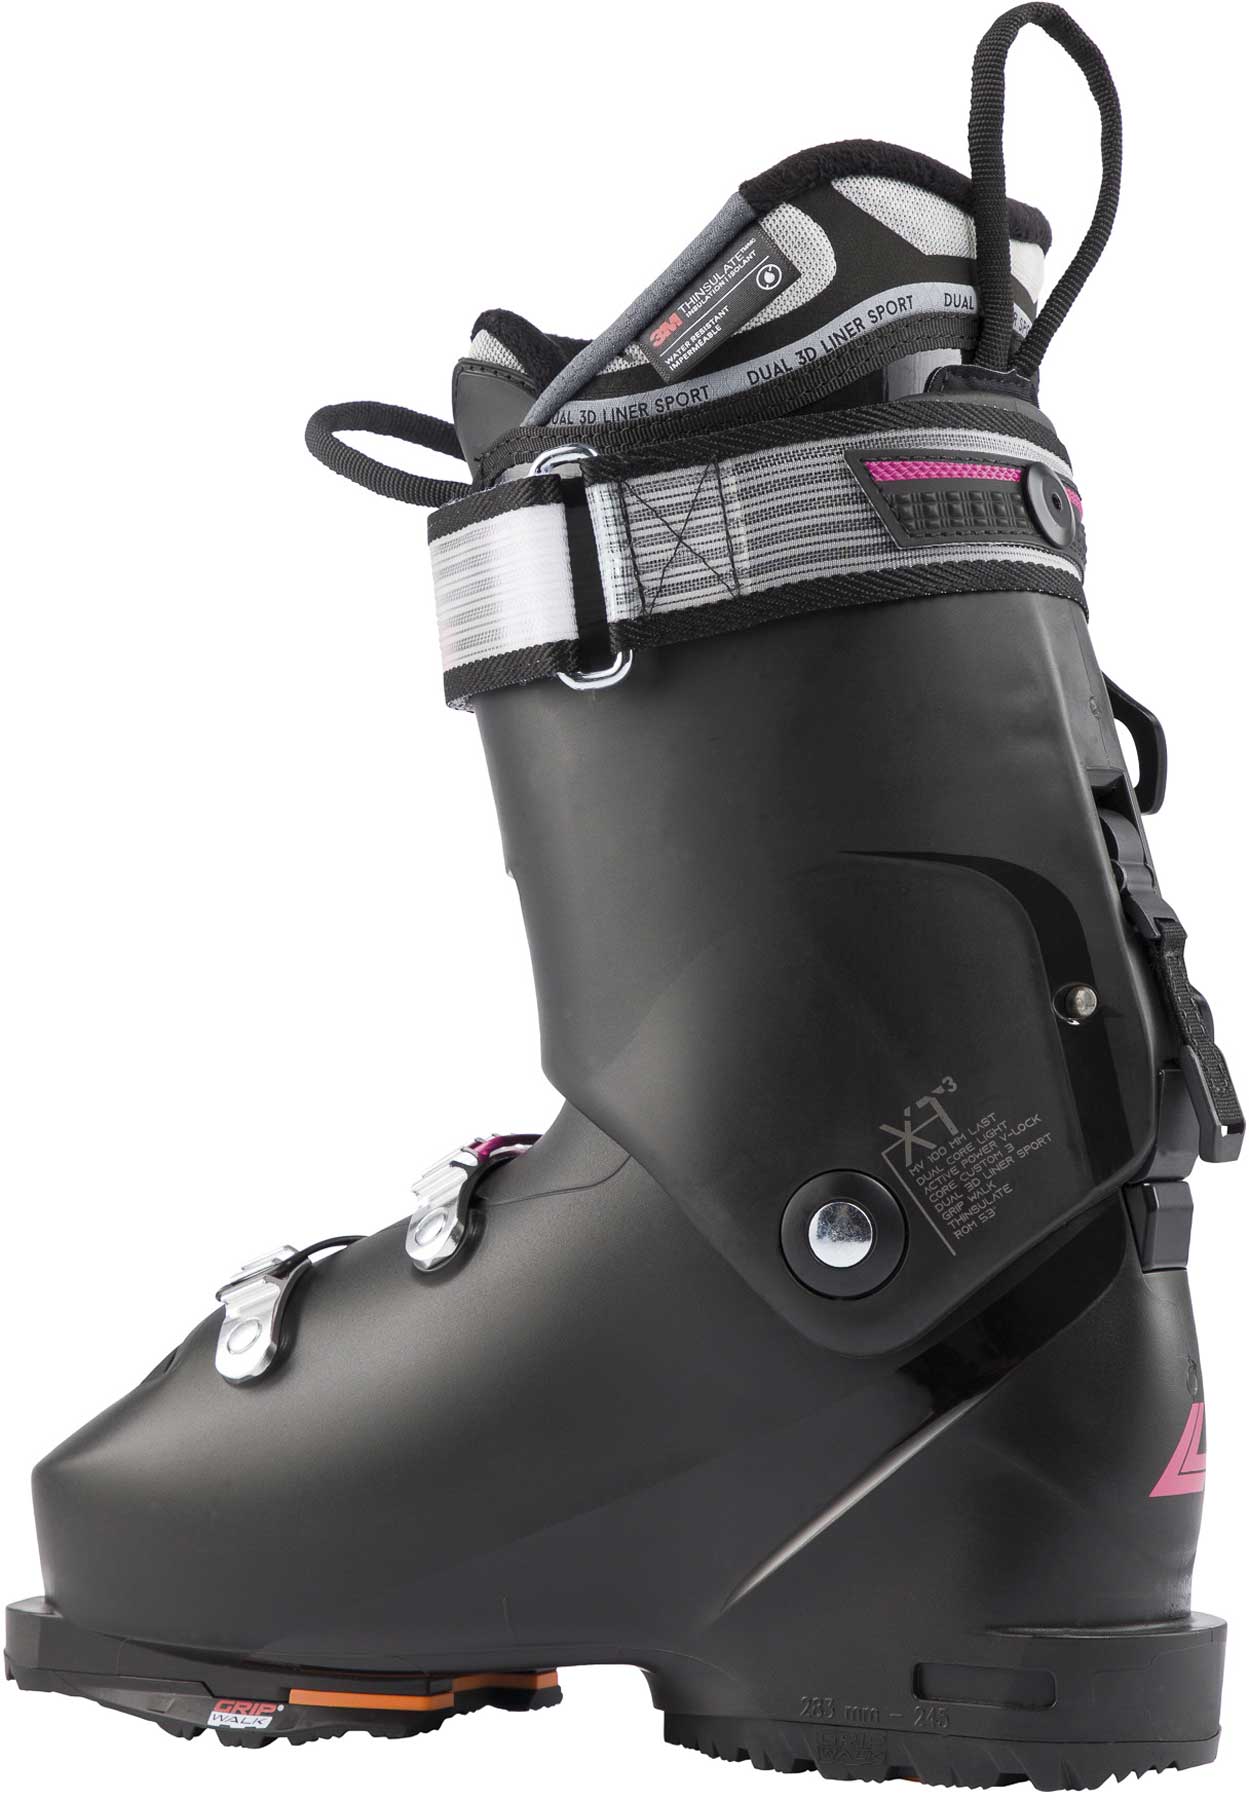 Women’s free ride ski boots